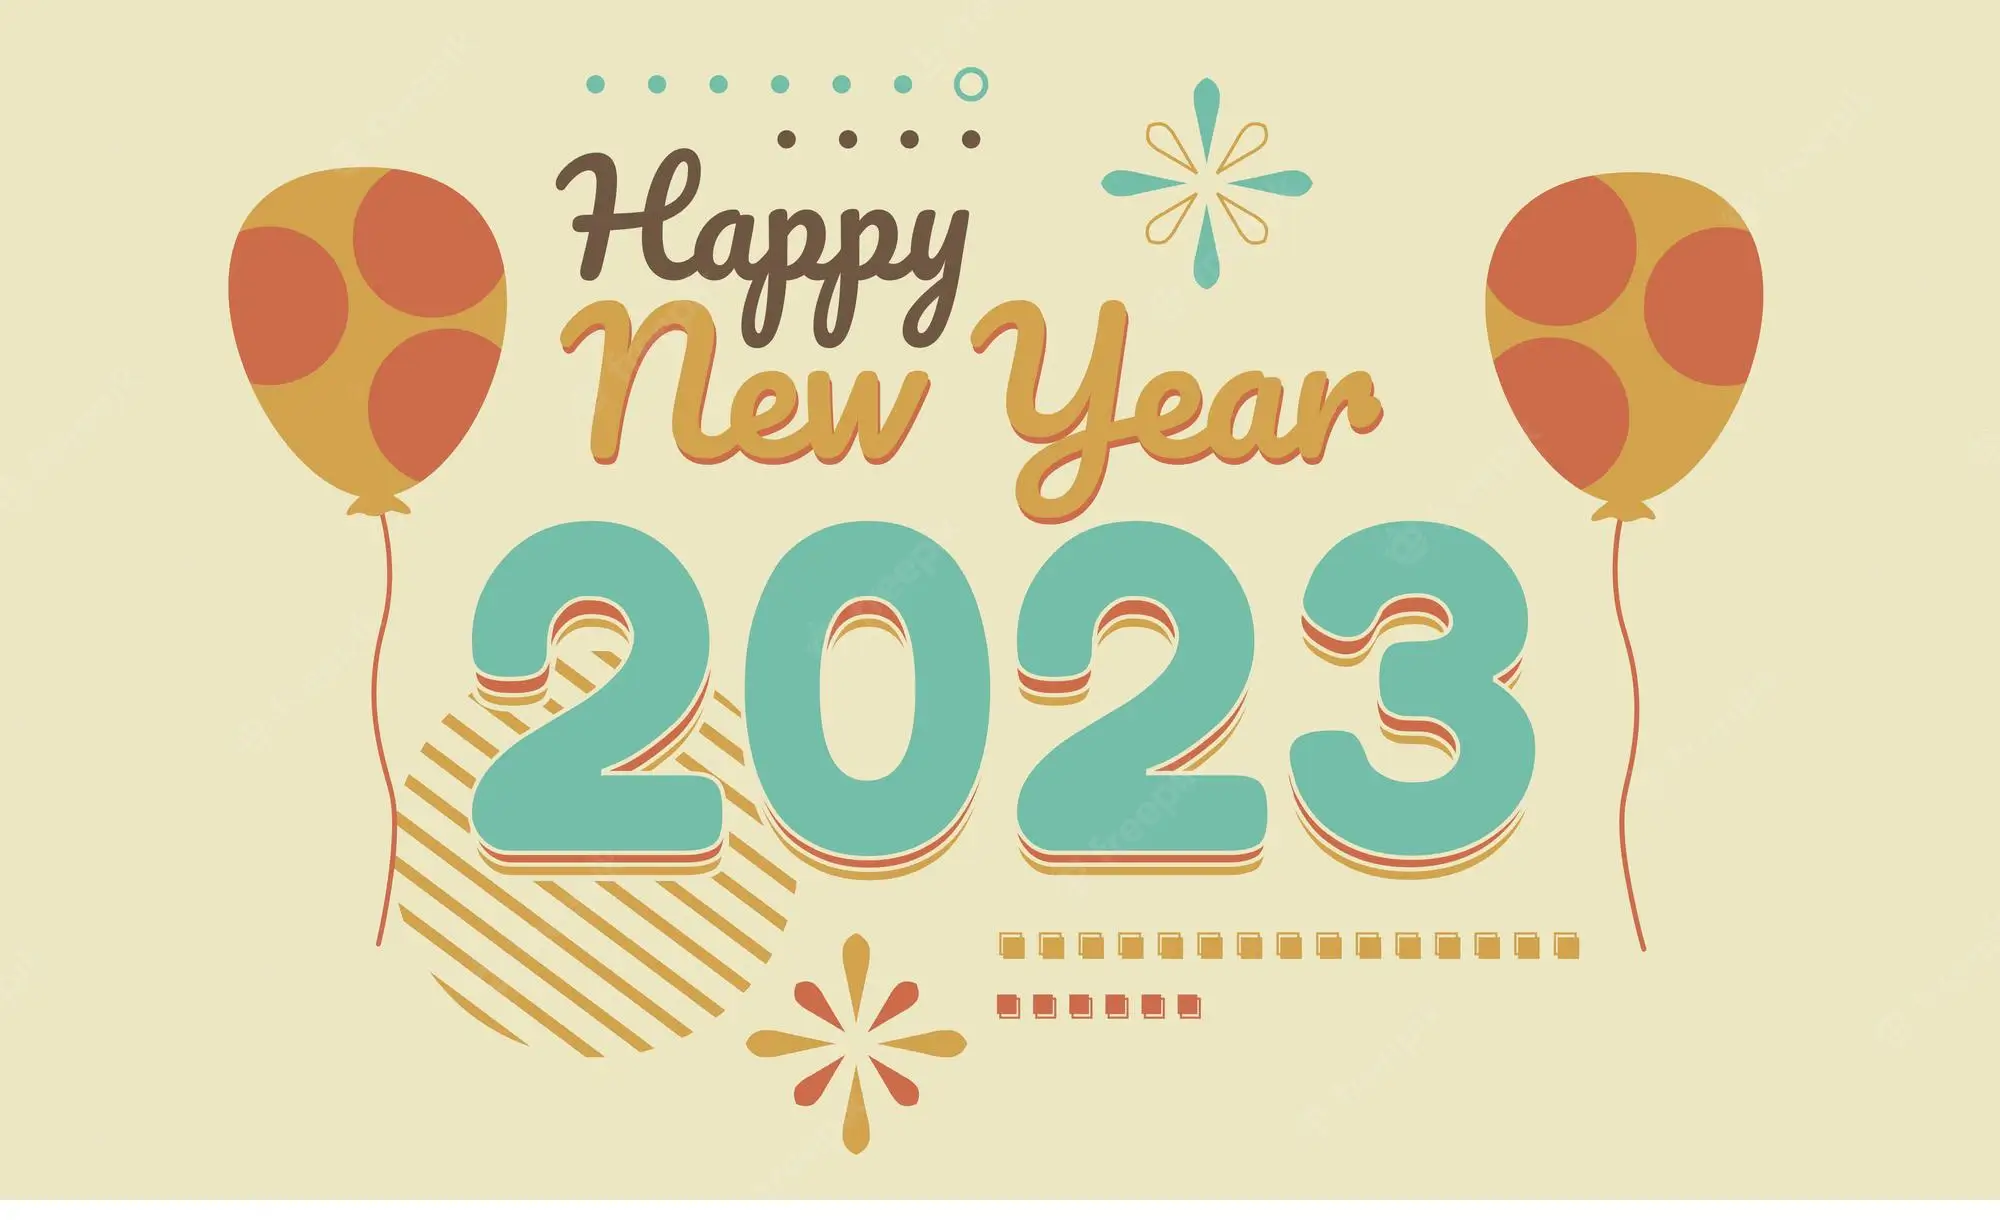 Happy New Year 2023 Photos